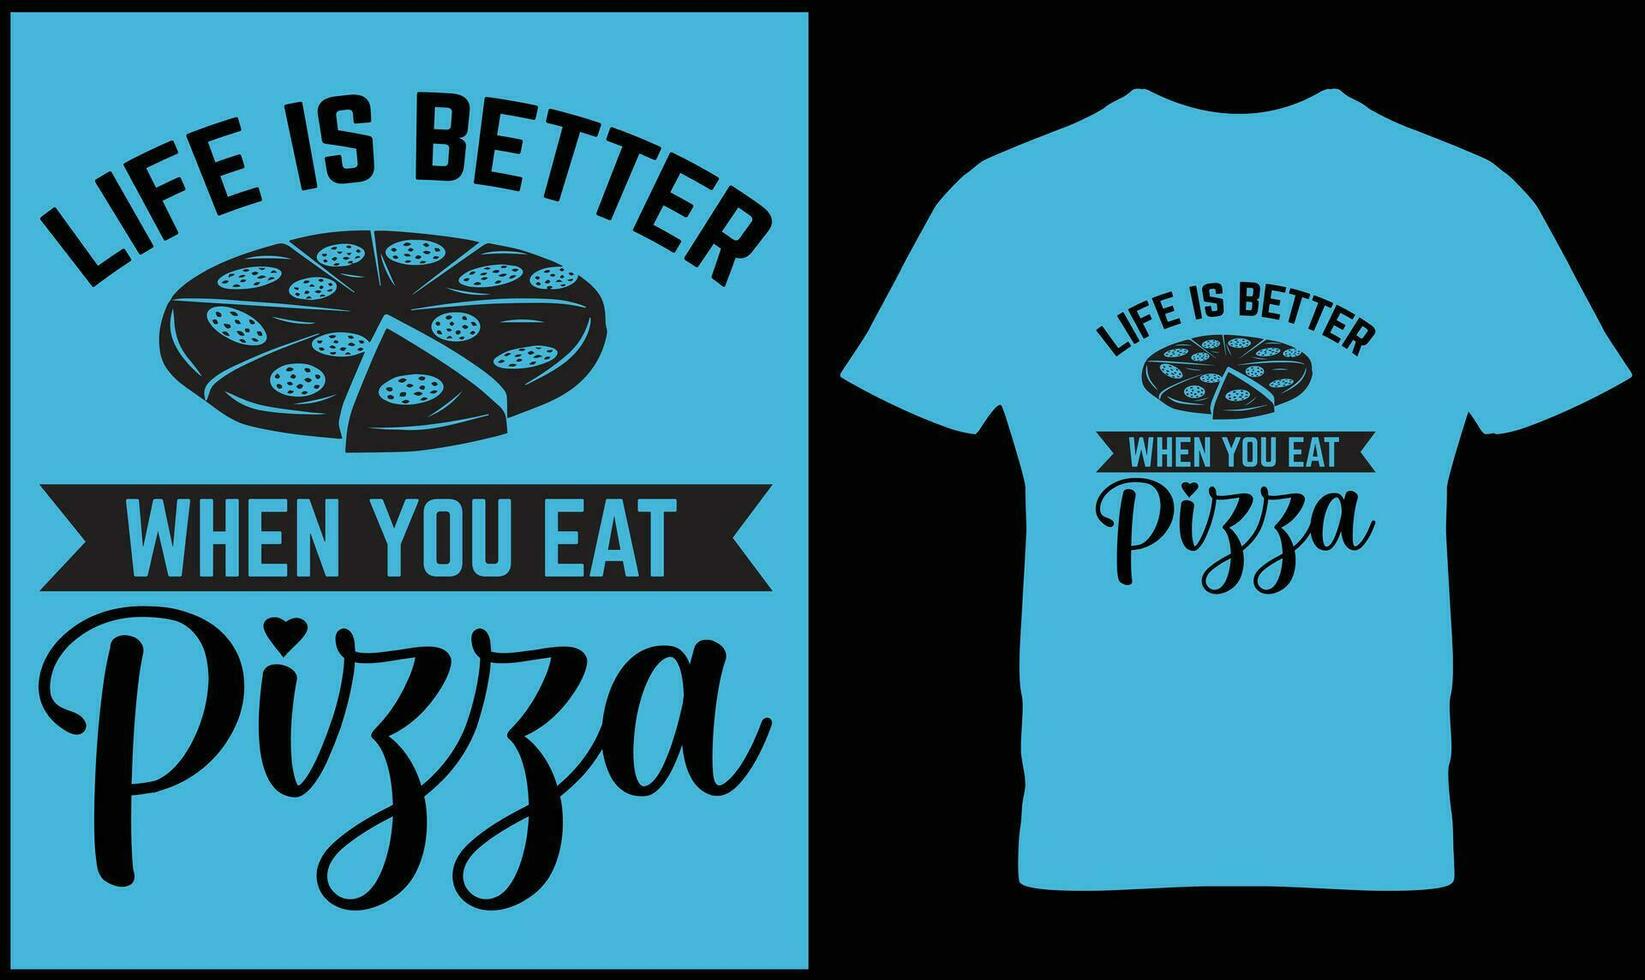 Pizza t-shirt design vector graphic.